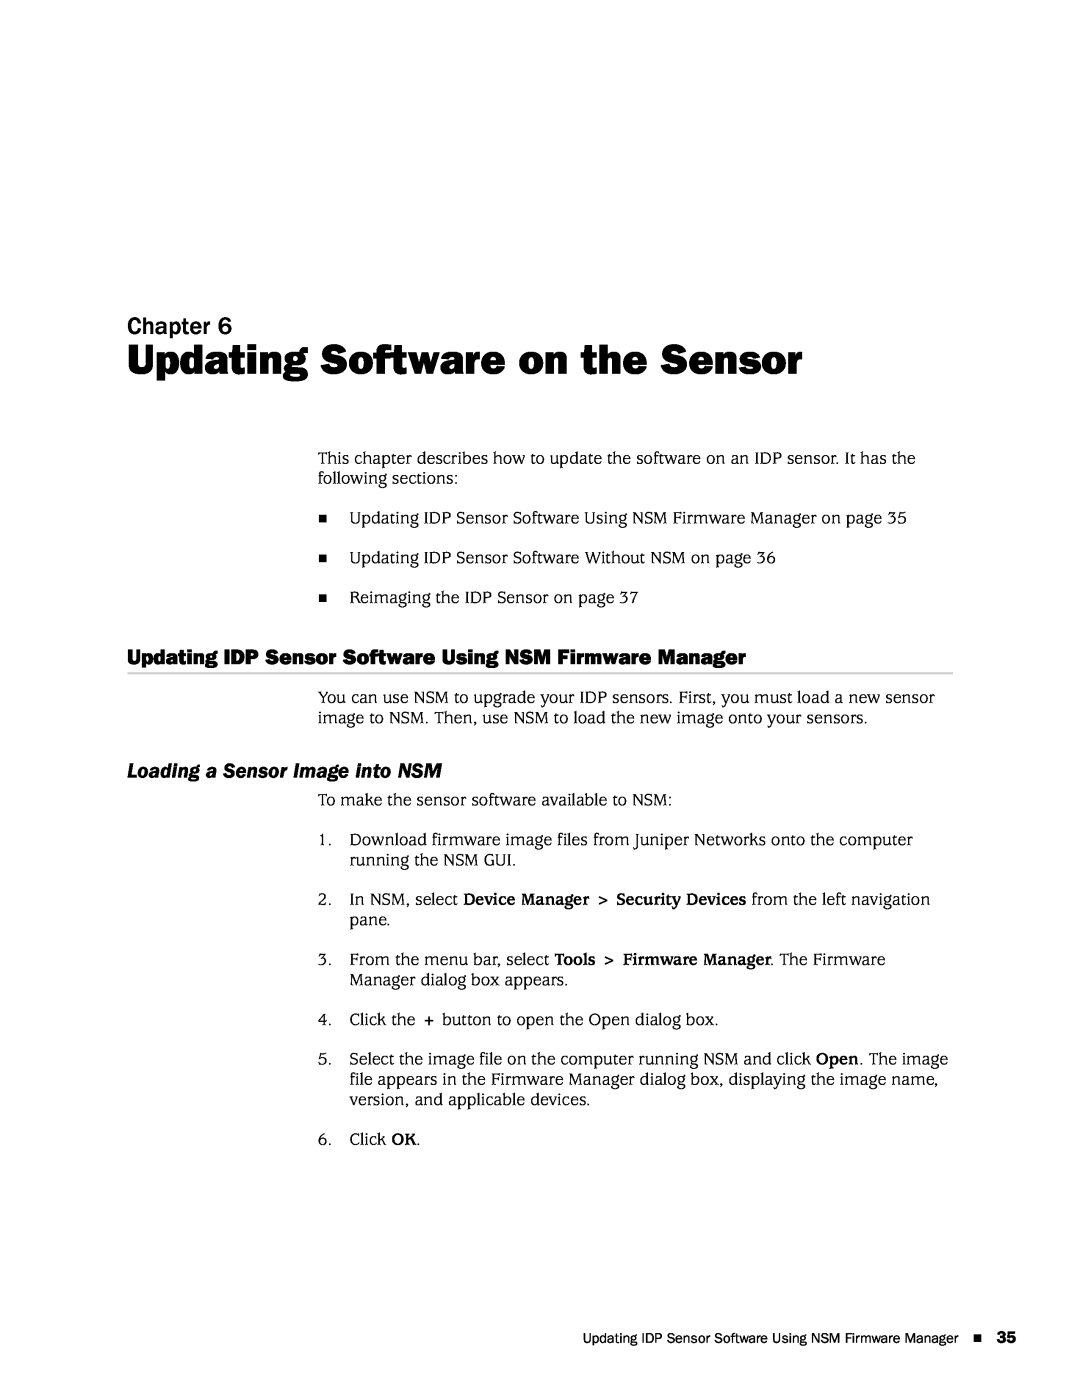 Juniper Networks IDP8200, IDP250, IDP 800, IDP75 Updating Software on the Sensor, Loading a Sensor Image into NSM, Chapter 